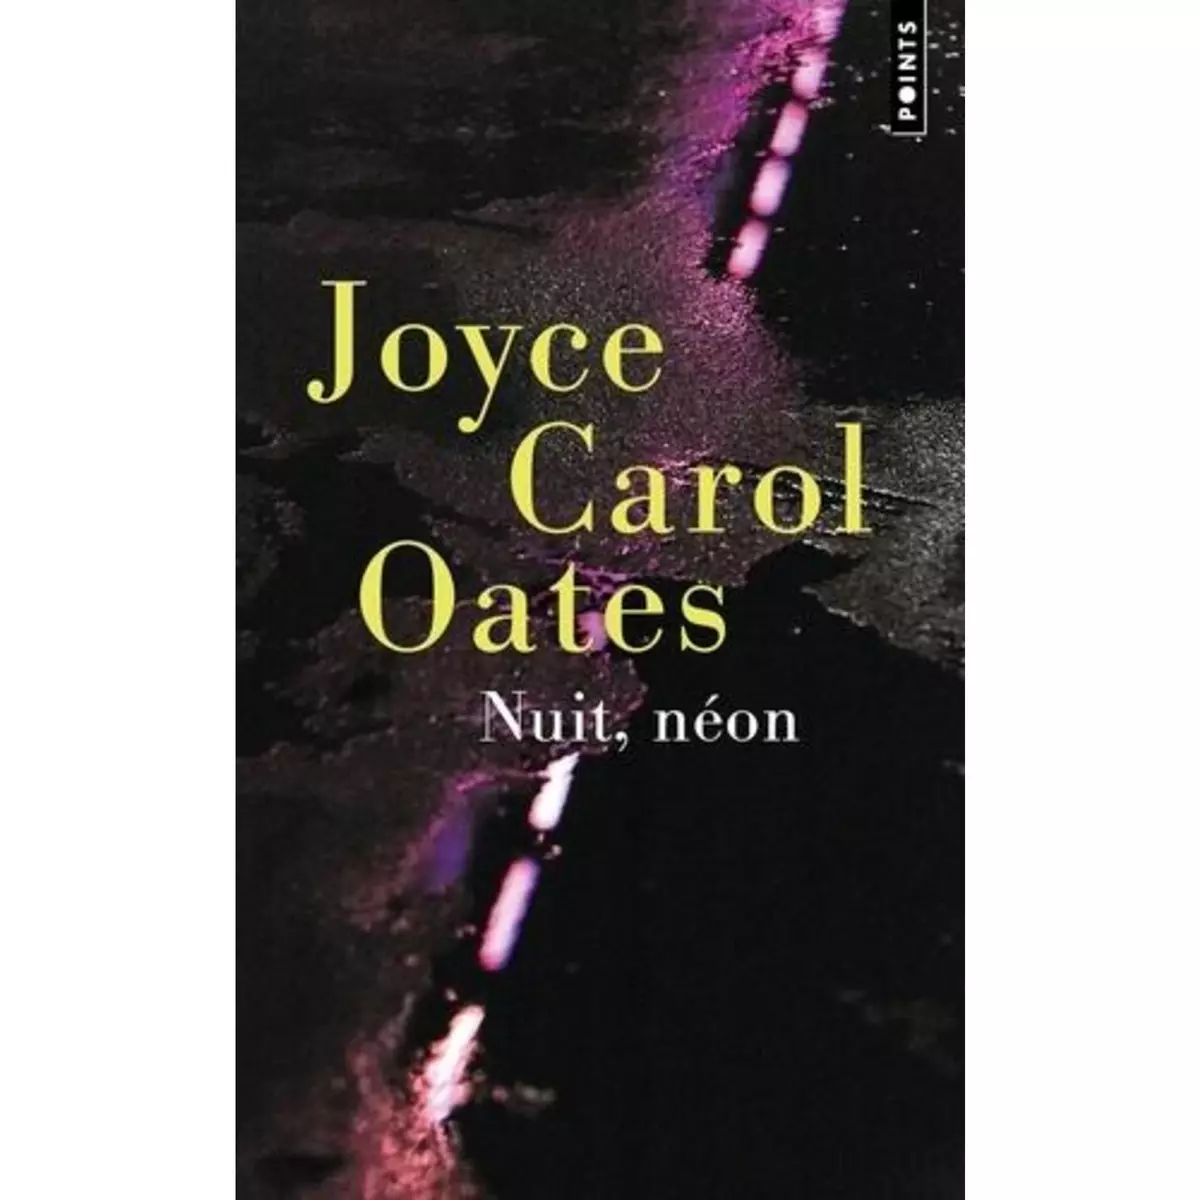  NUIT, NEON. RECIT MYSTERIEUX A SUSPENSE, Oates Joyce Carol